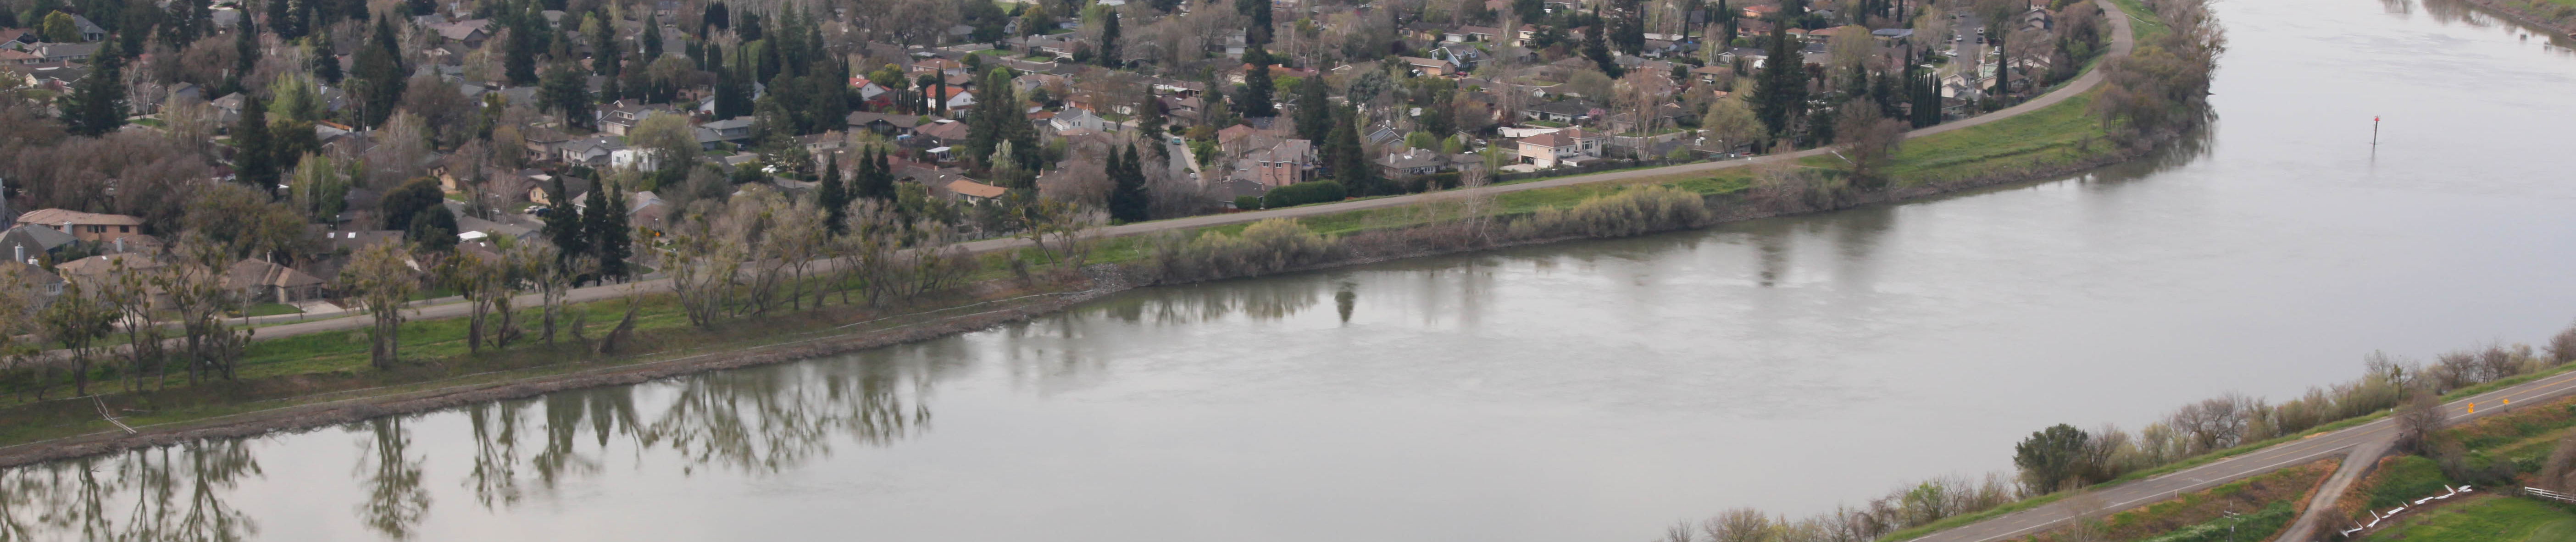 Banner - Image of Sacramento River 